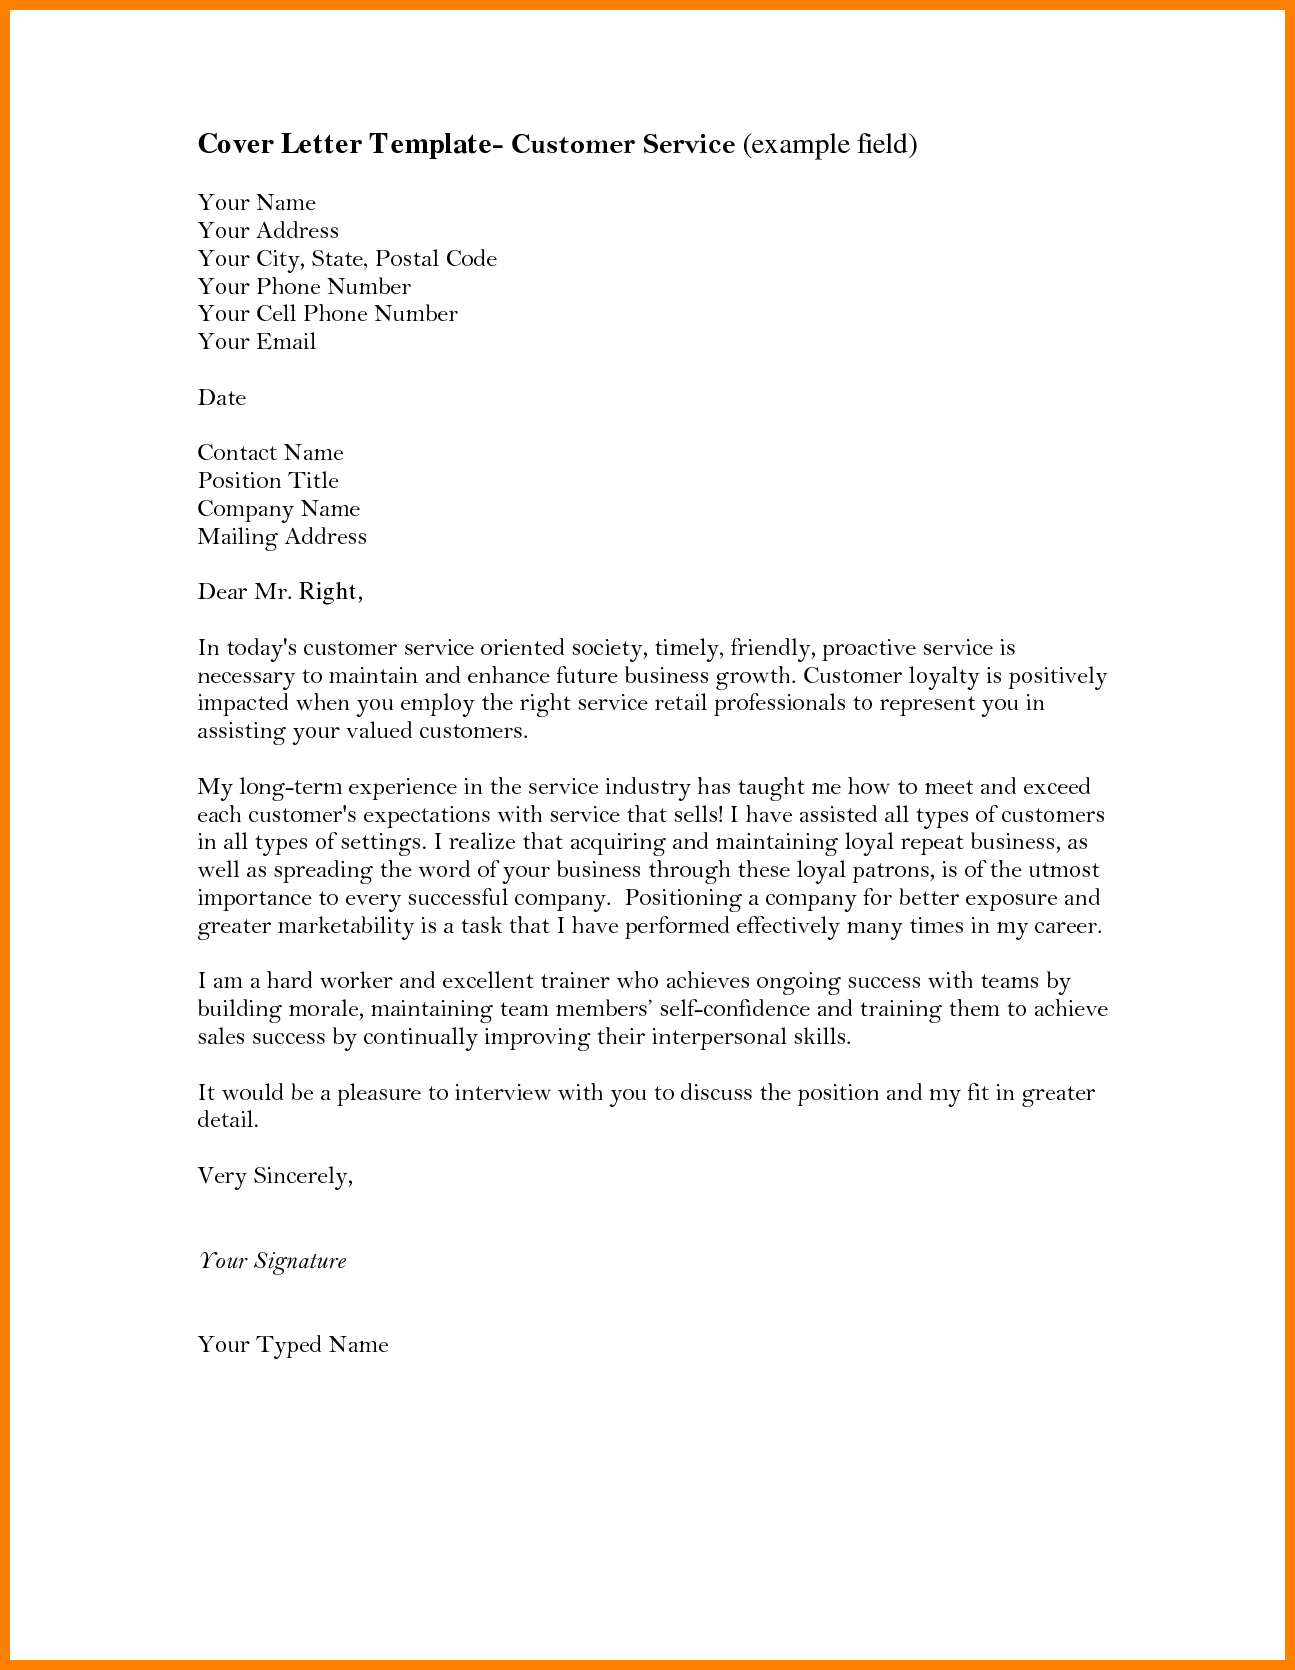 Top Customer Service Representative Cover Letter Template